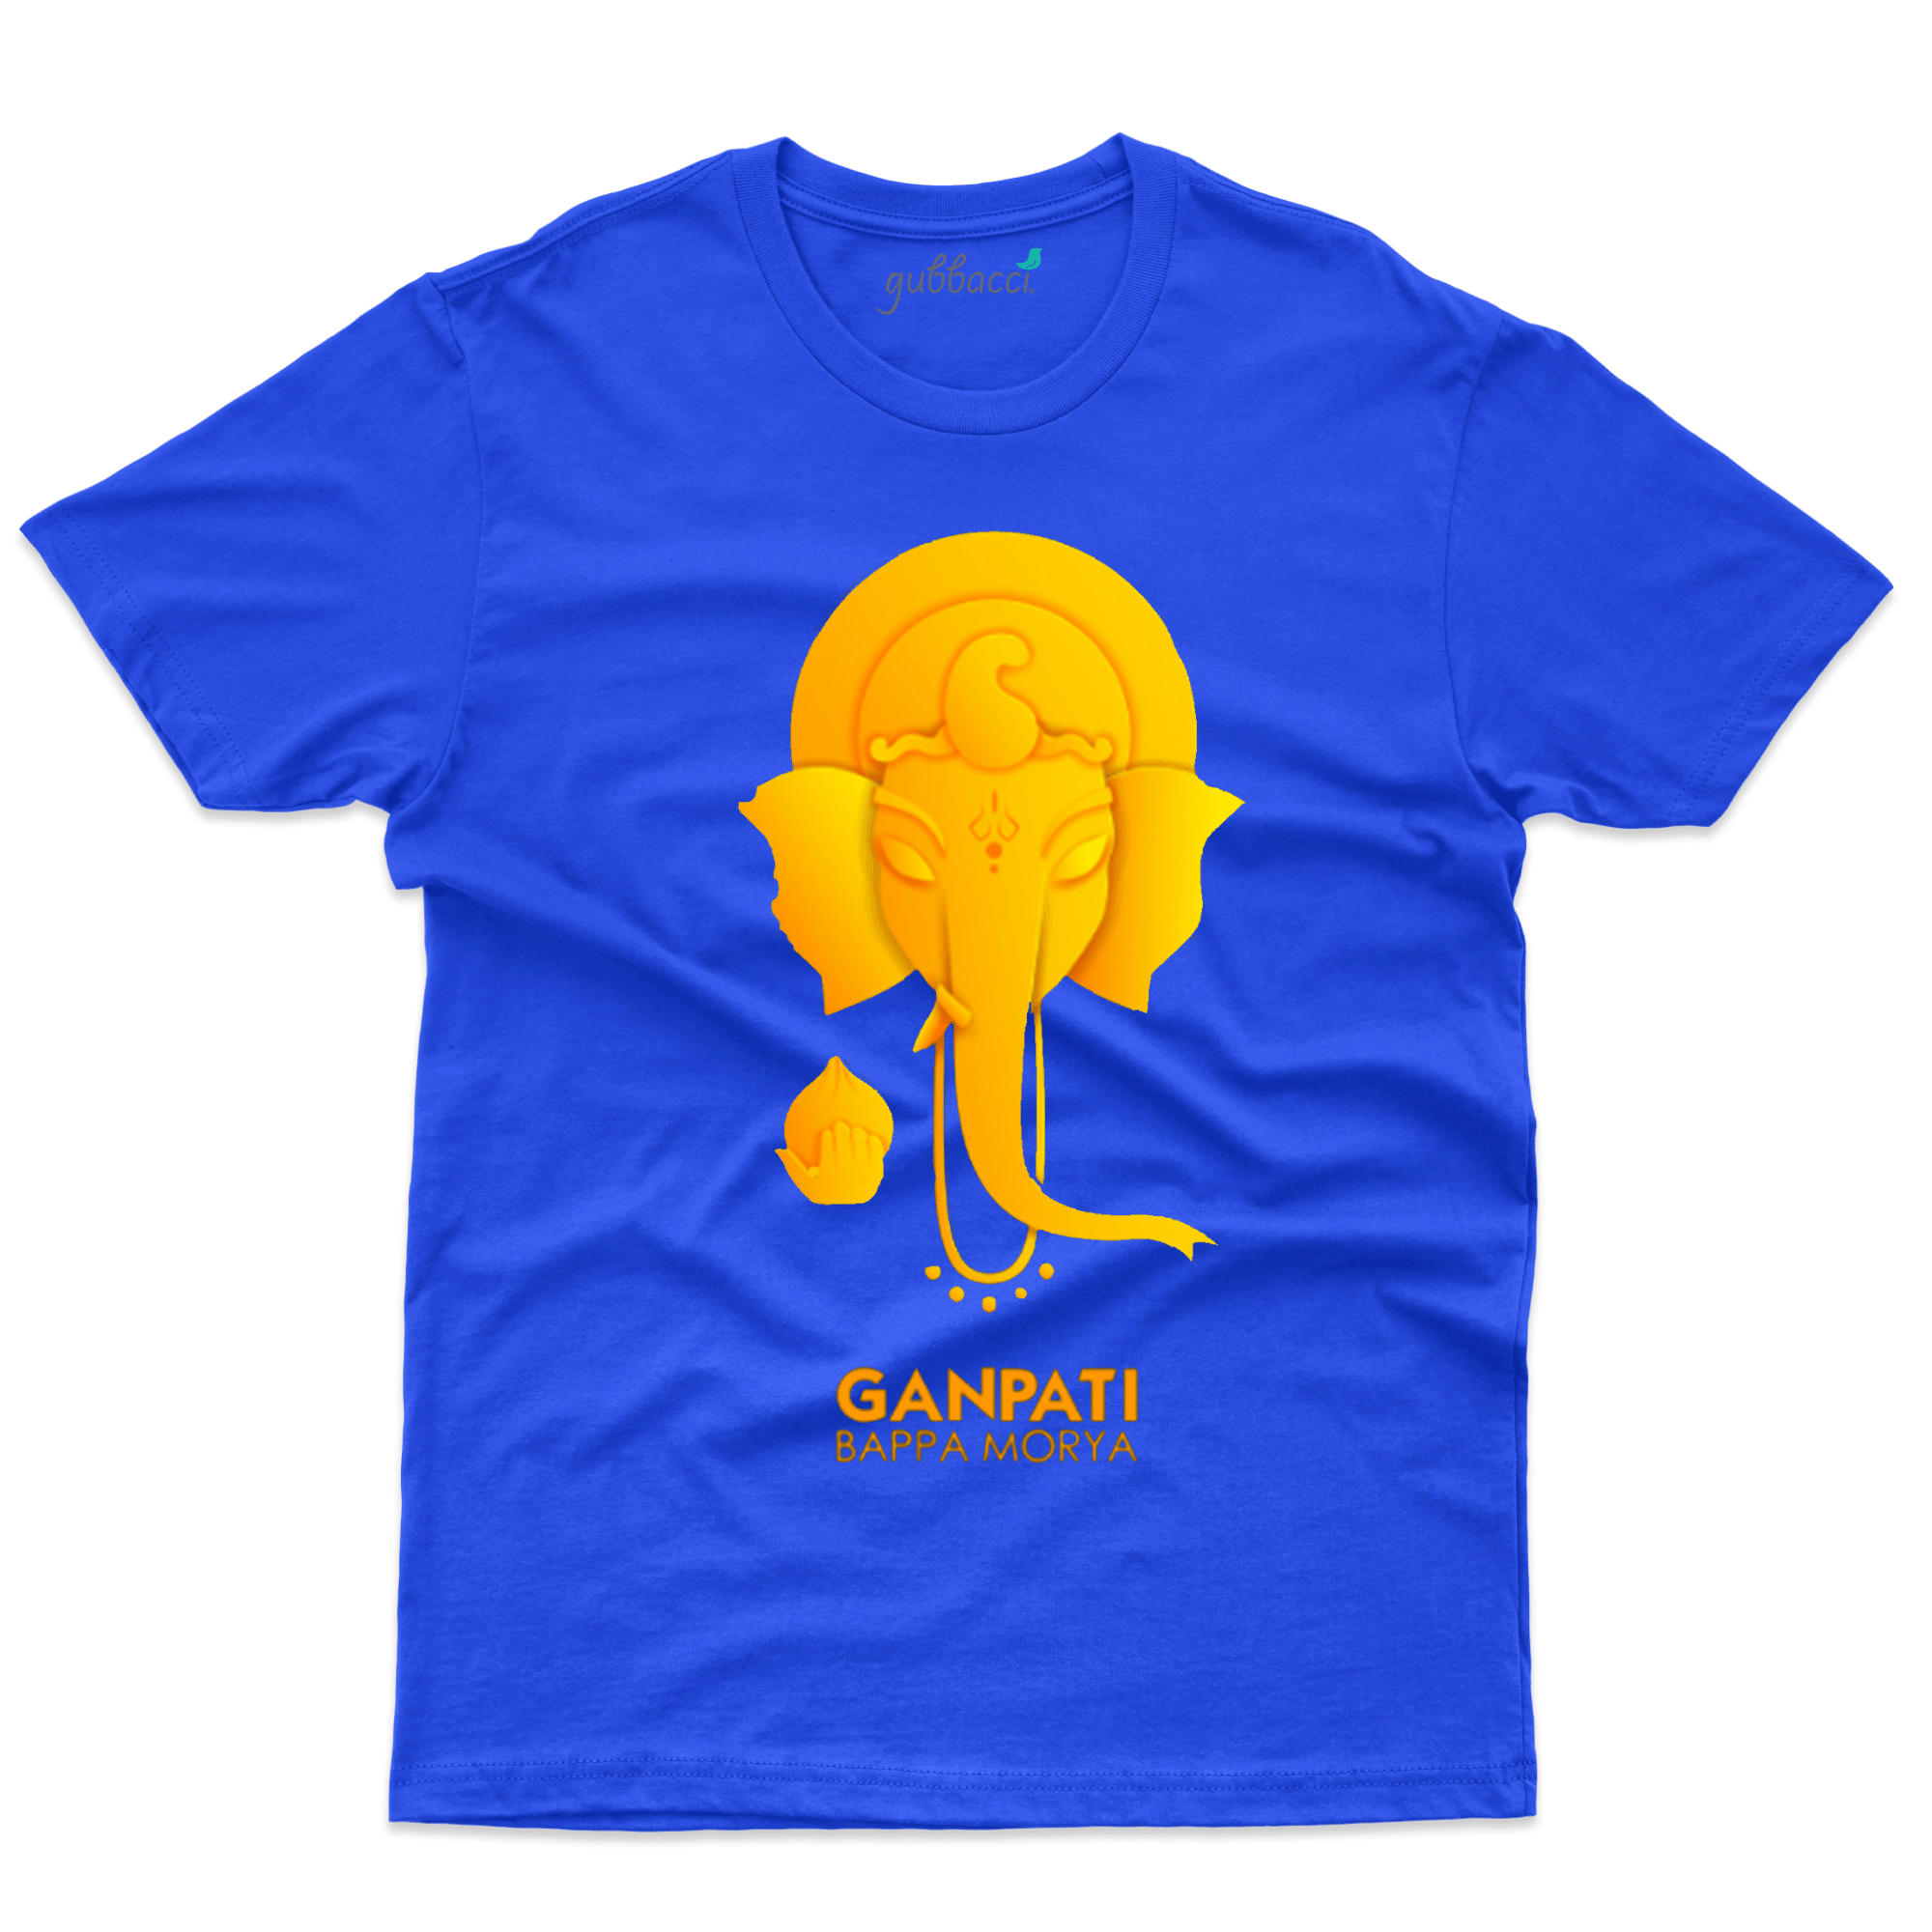 ganpati tshirt design2023 | Garment, T shirt